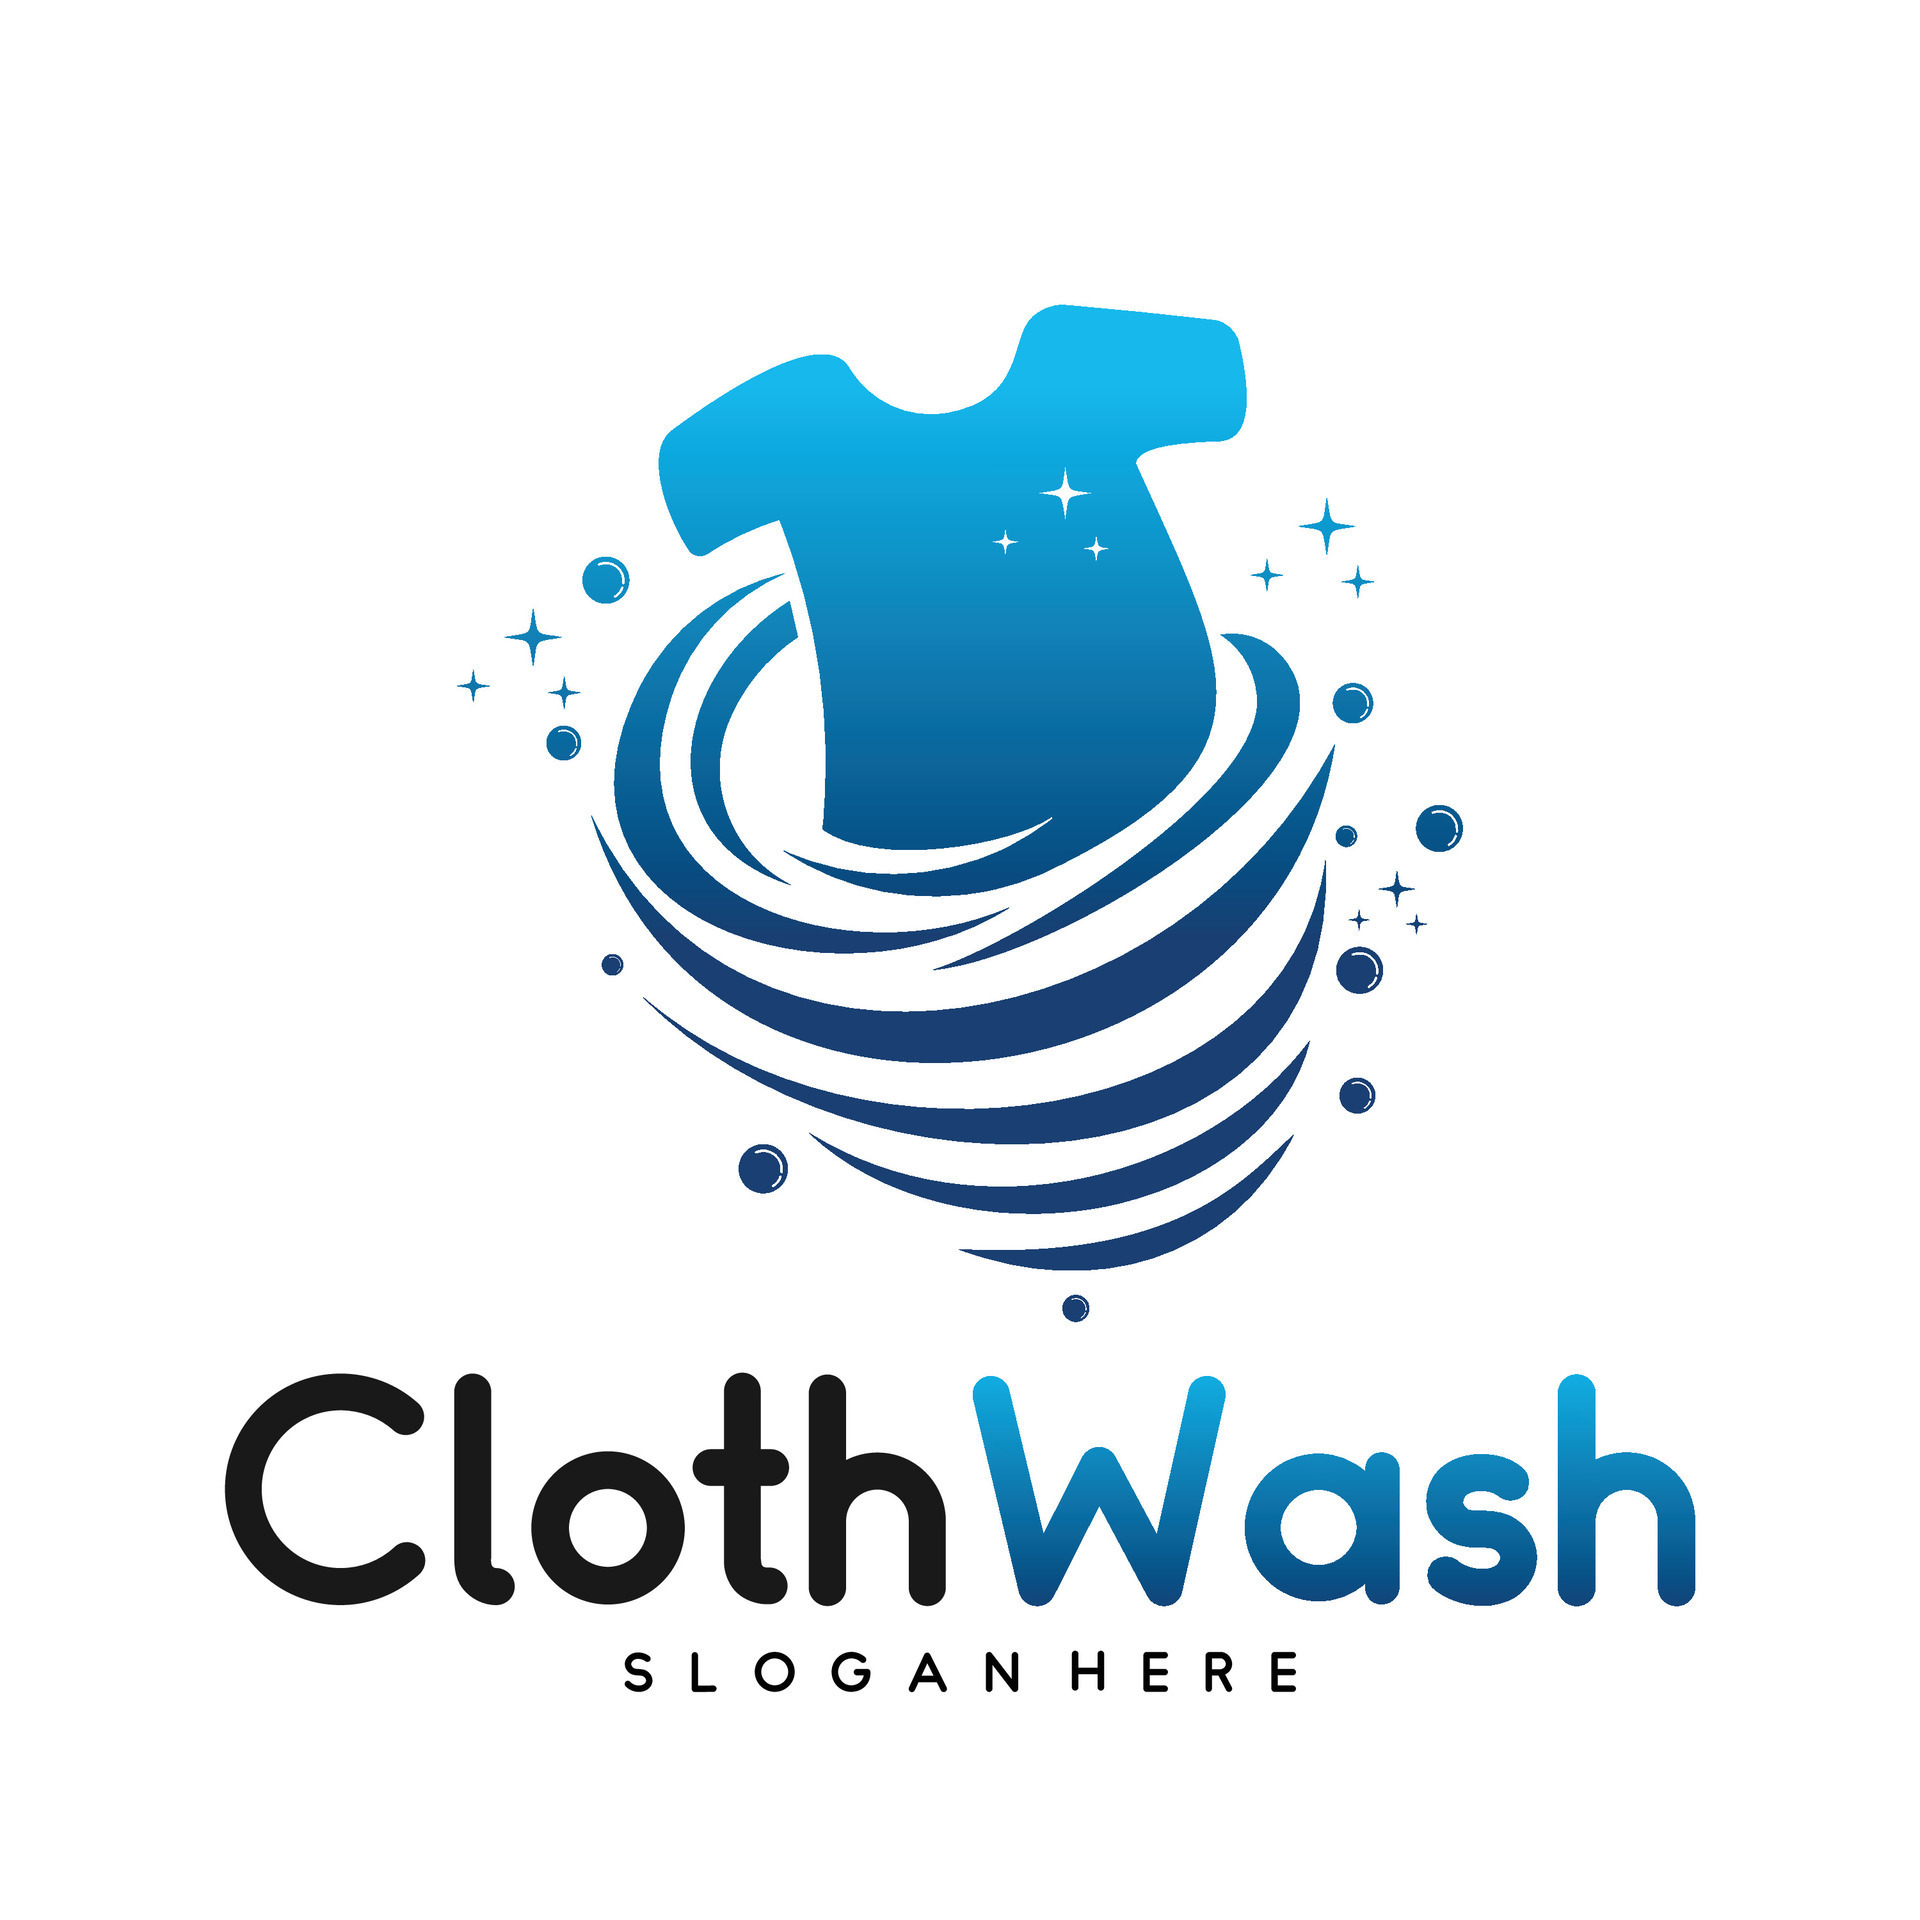 Cloth Wash logo designs, Laundry logo Template designs vector ...